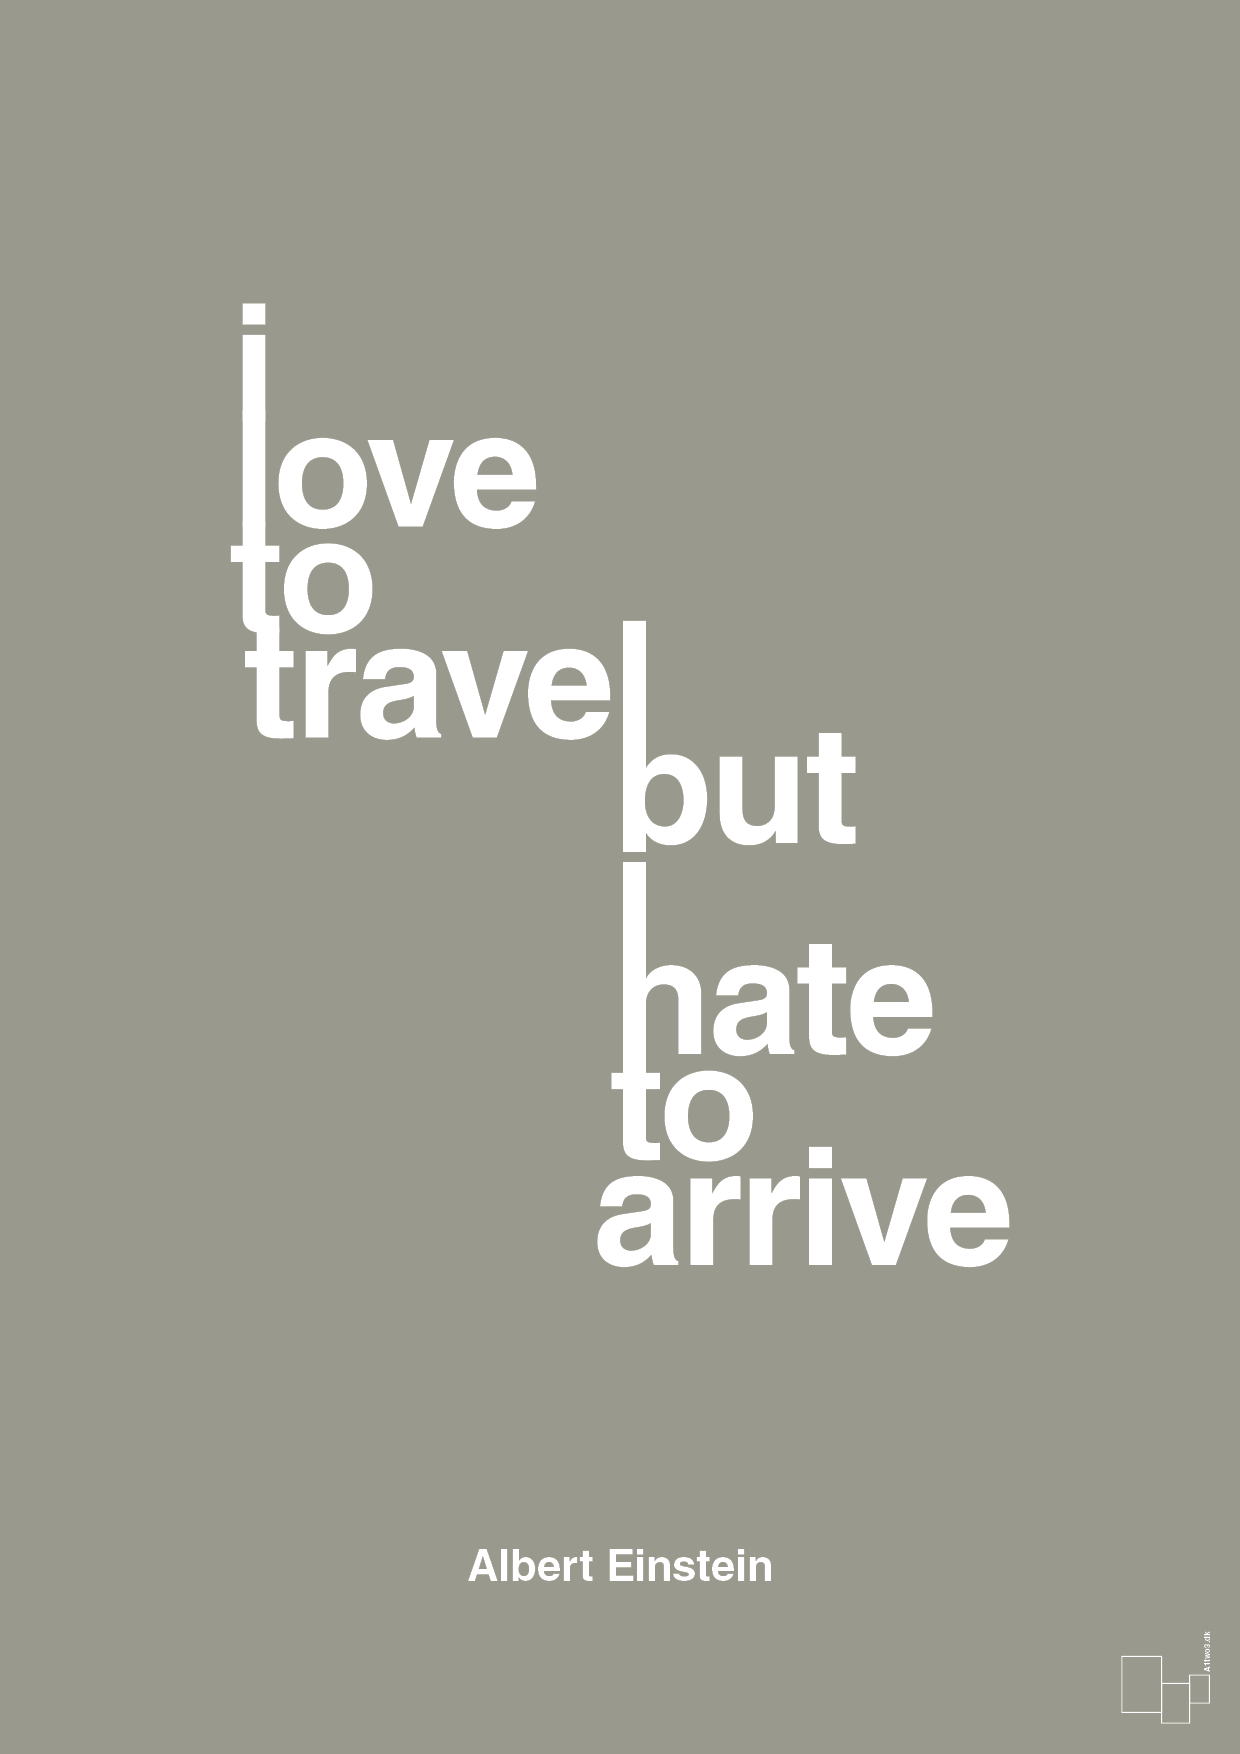 i love to travel but hate to arrive - Plakat med Citater i Battleship Gray